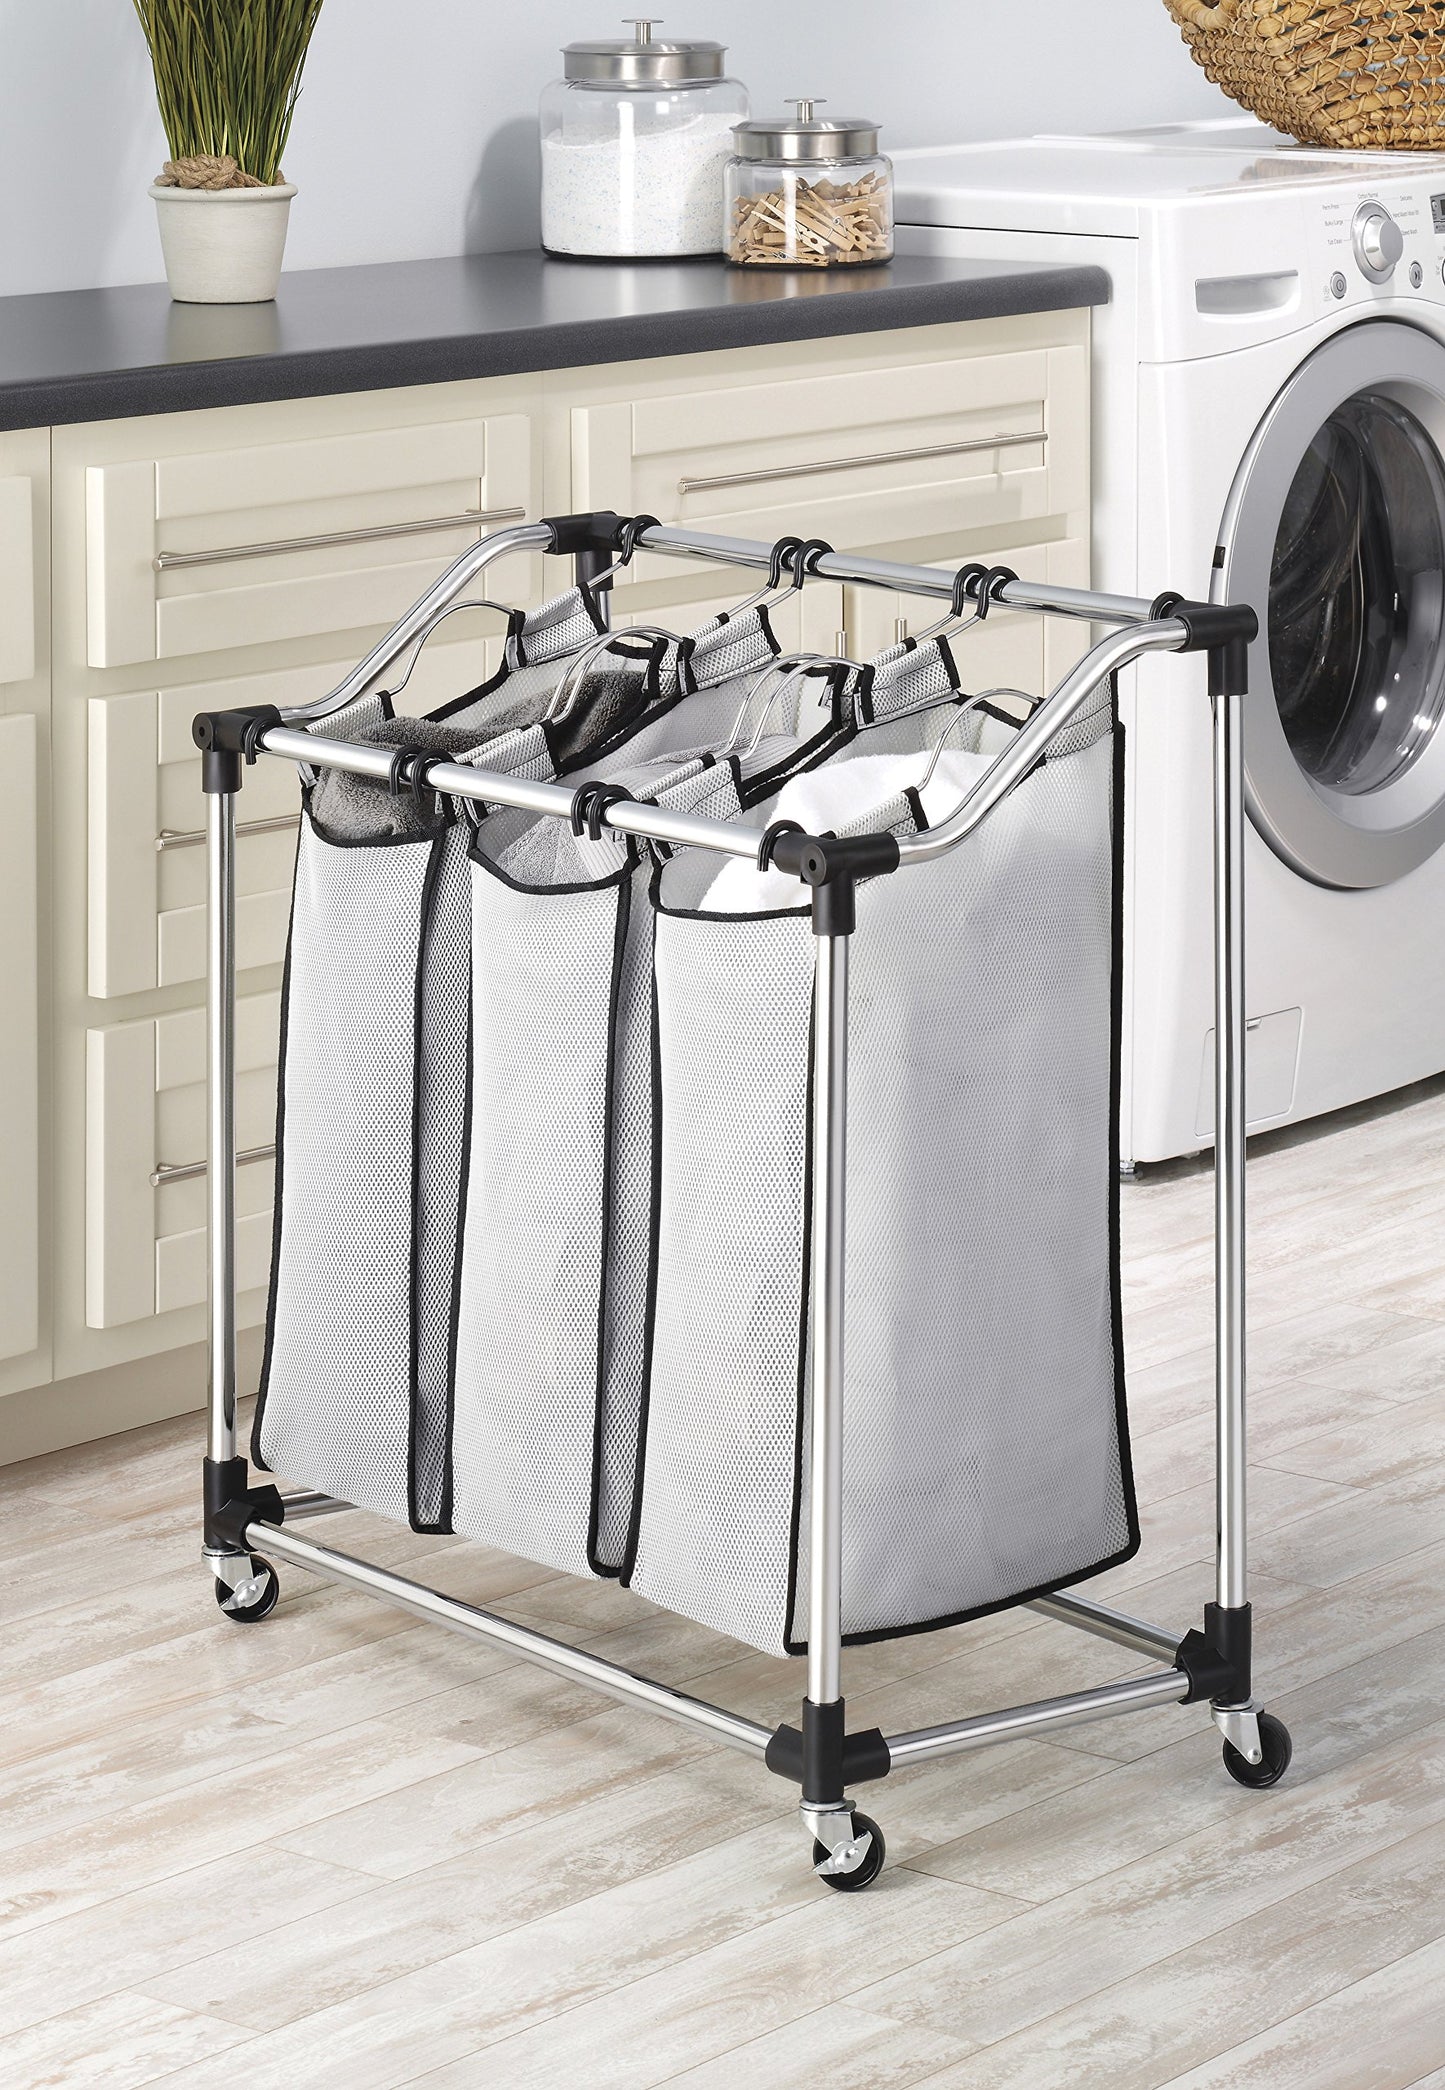 Whitmor Chrome Laundry Sorter with Foam Mesh Bags